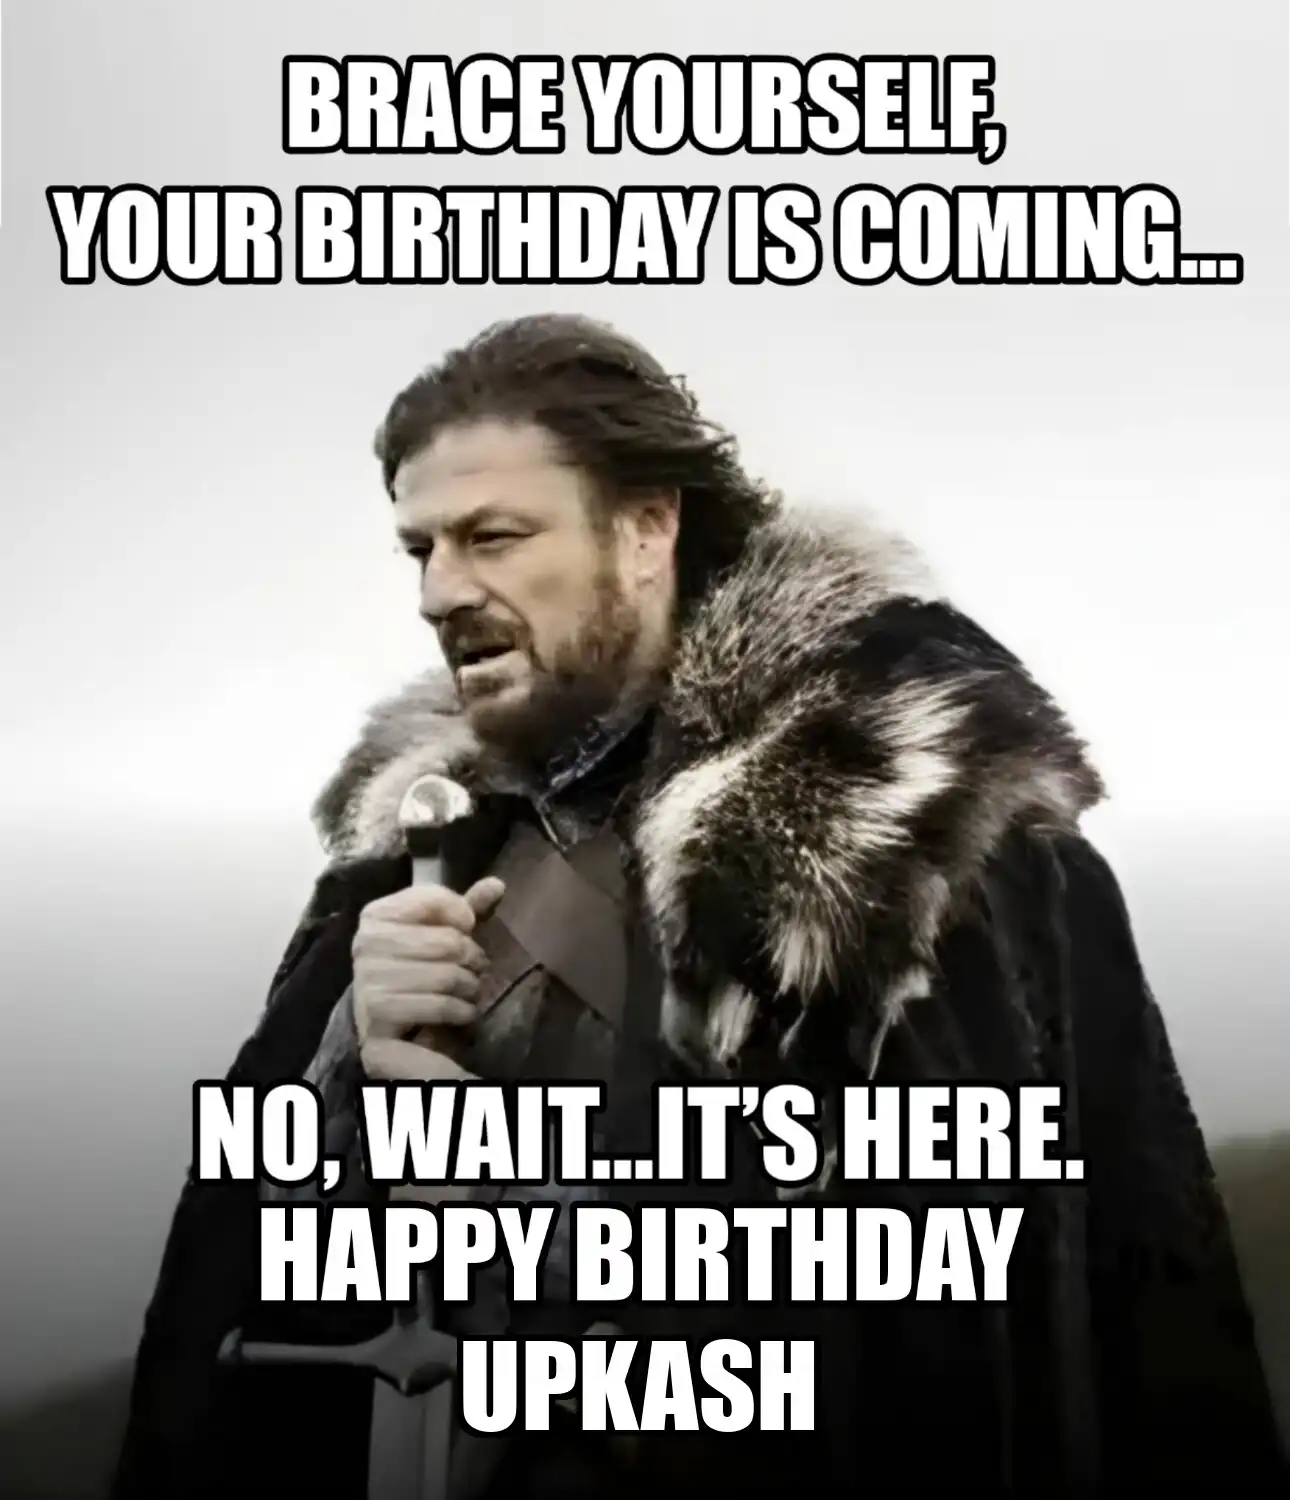 Happy Birthday Upkash Brace Yourself Your Birthday Is Coming Meme